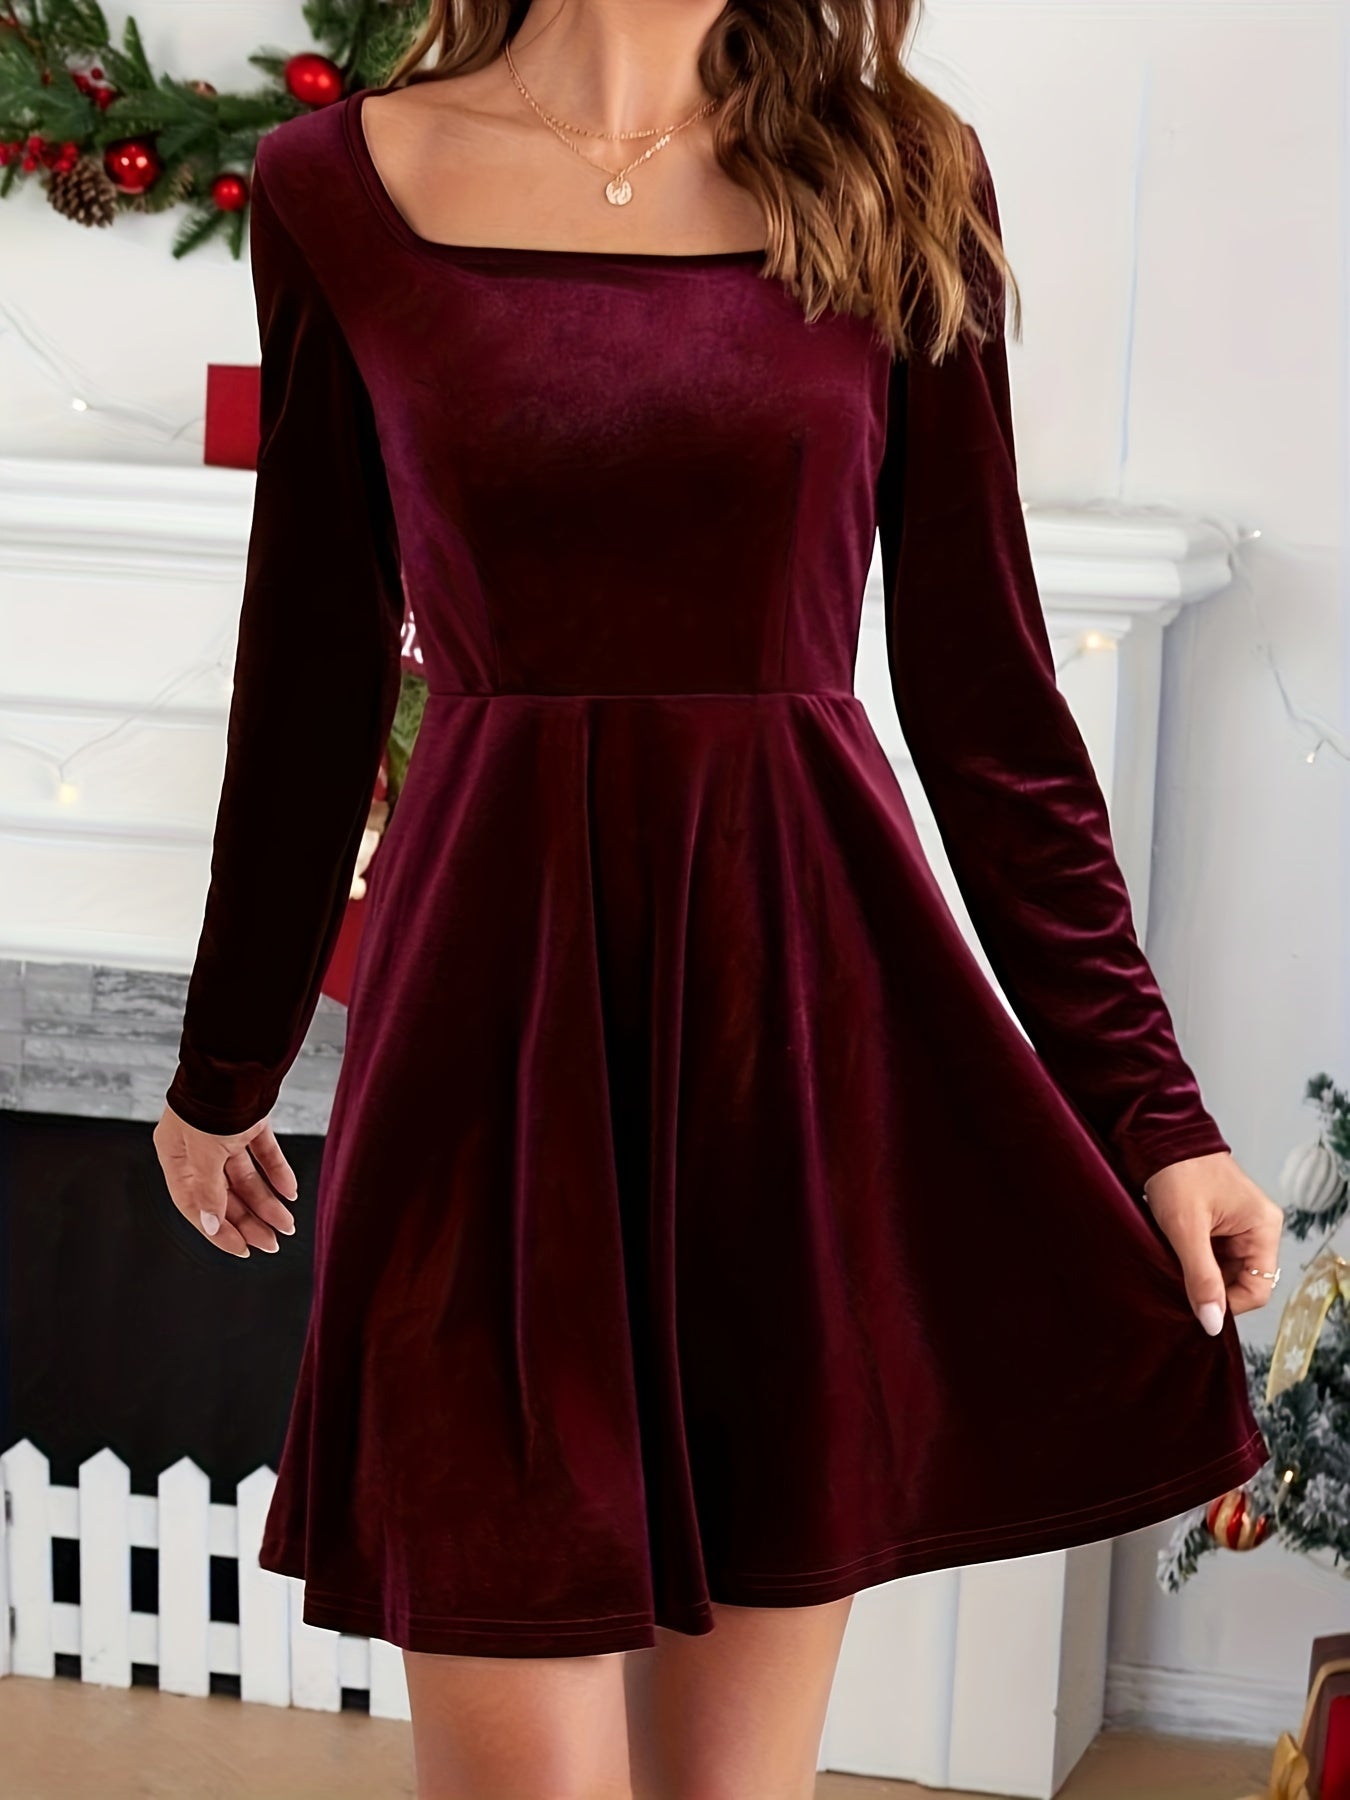 Antmvs Solid Squared Neck Mini Dress, Elegant Long Sleeve Party Dress, Women's Clothing